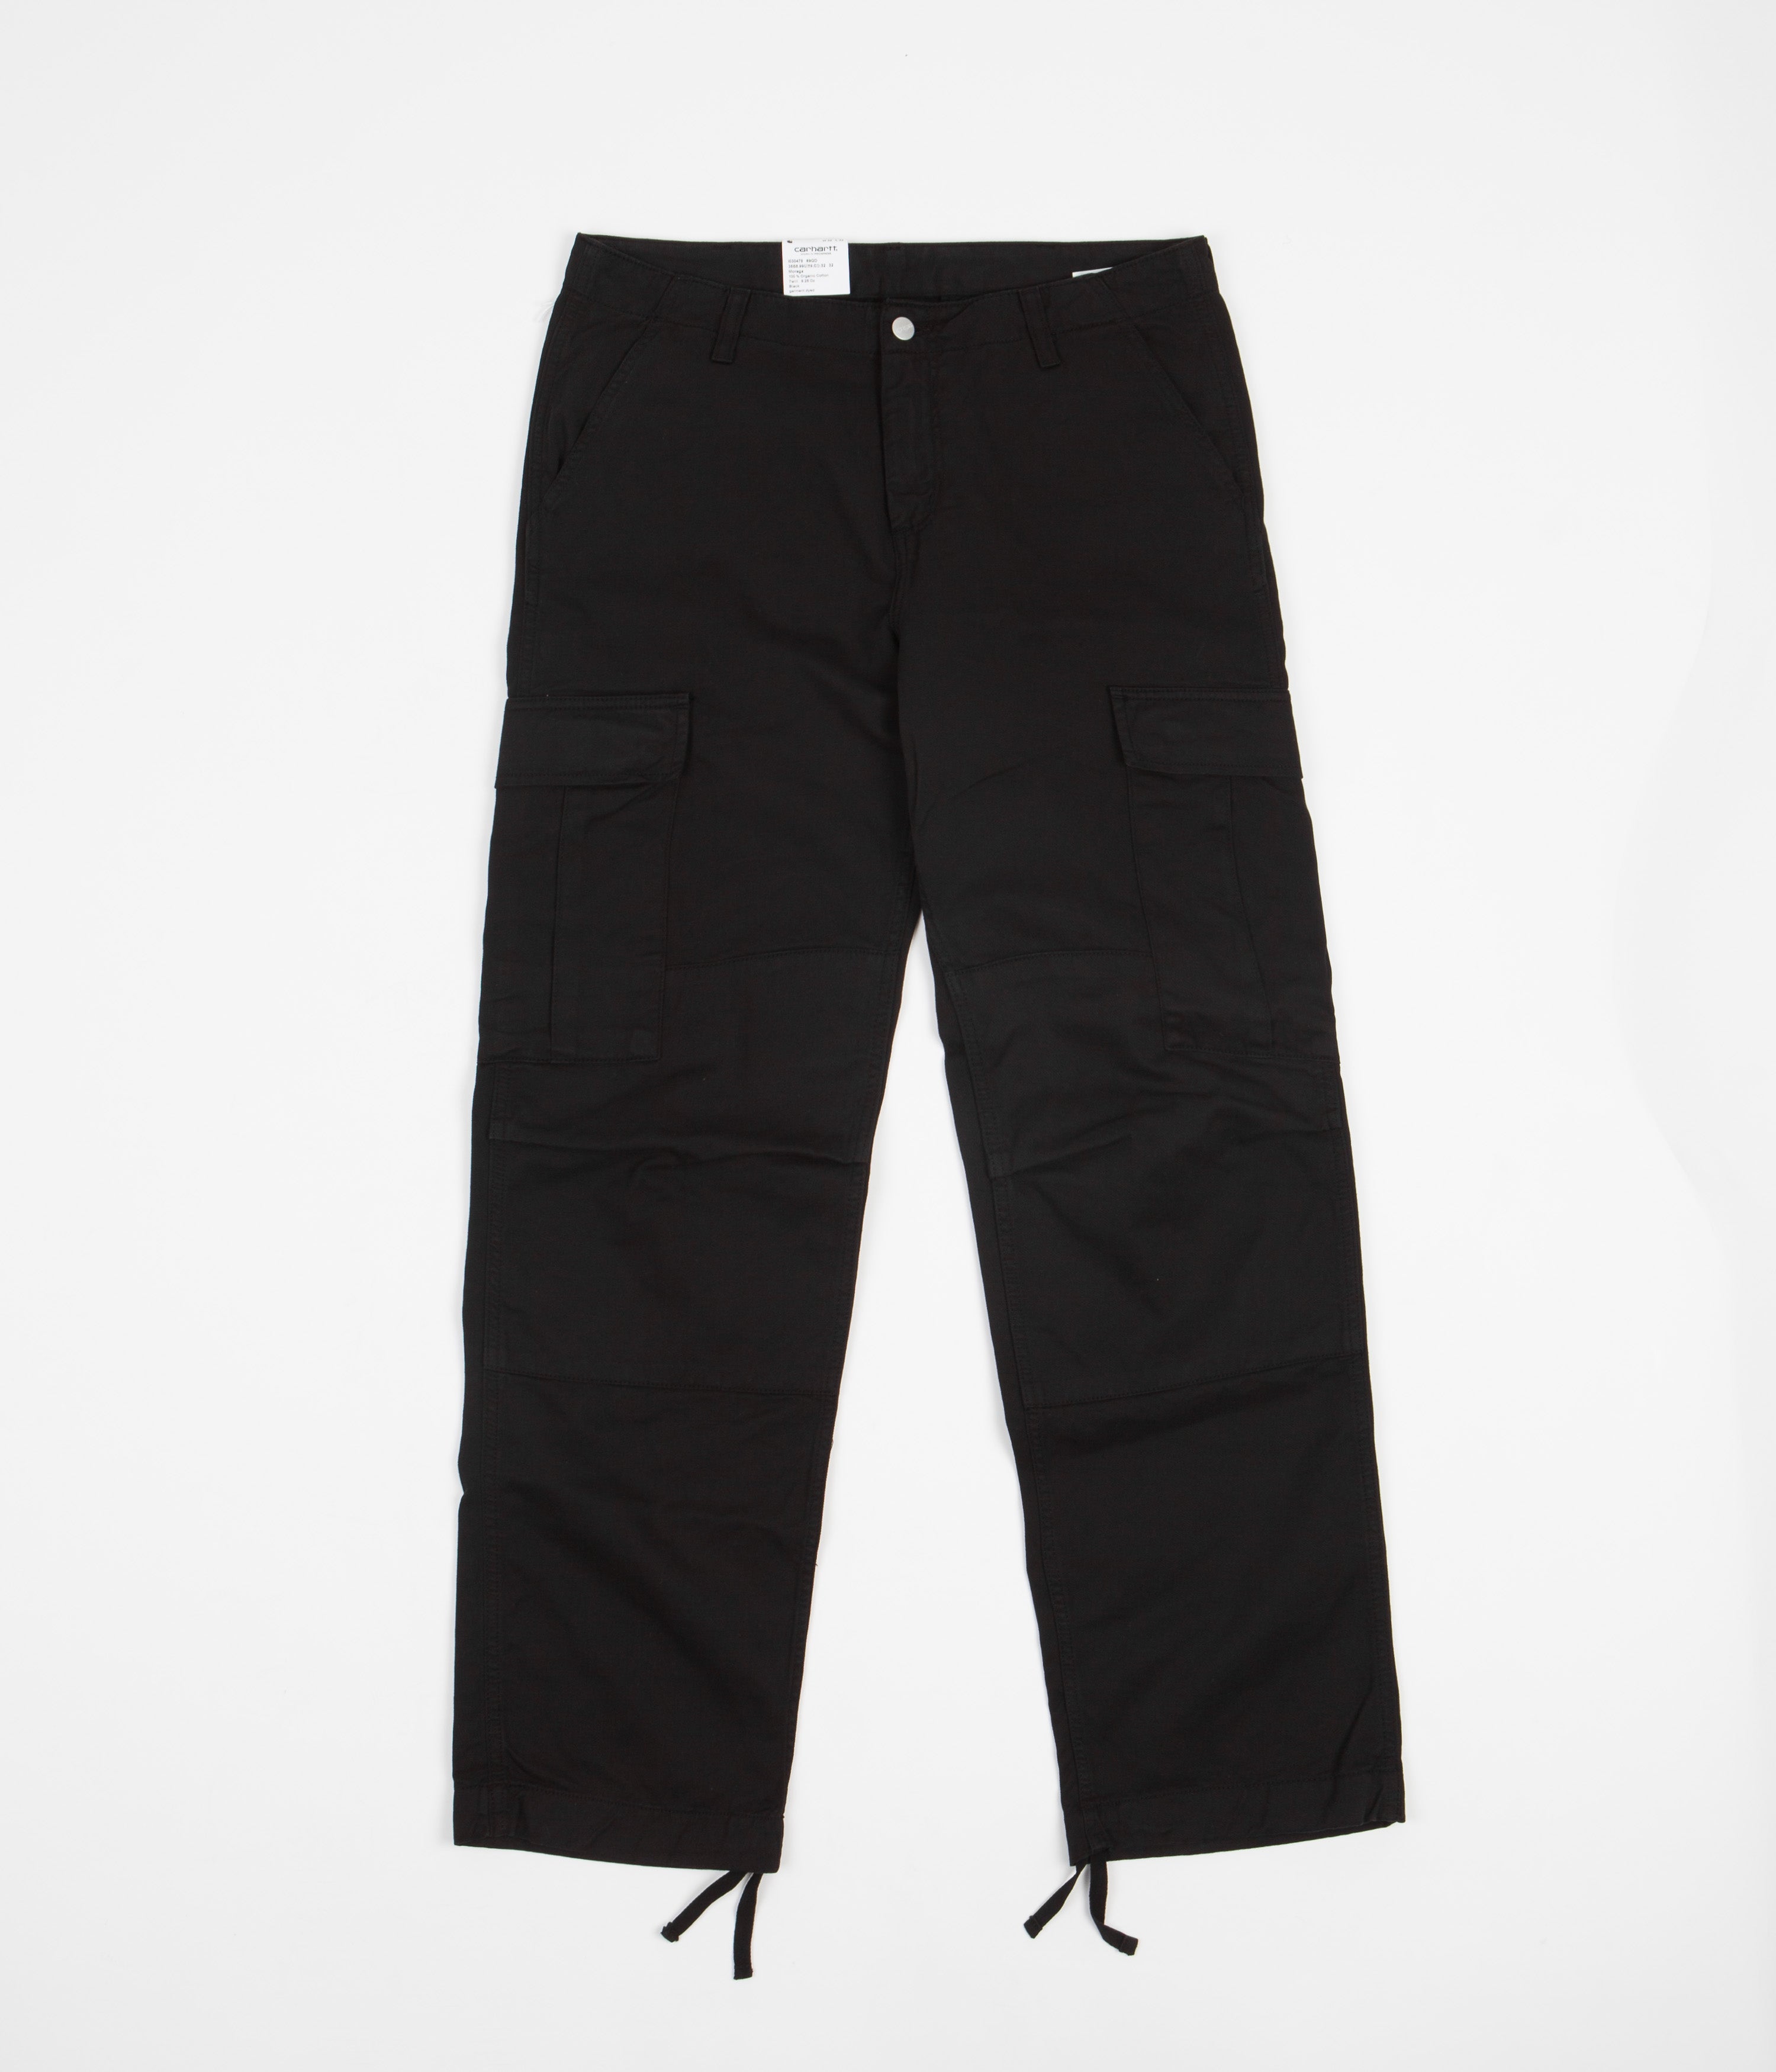 Pepe Jeans CRUISE - Cargo trousers - olive - Zalando.de